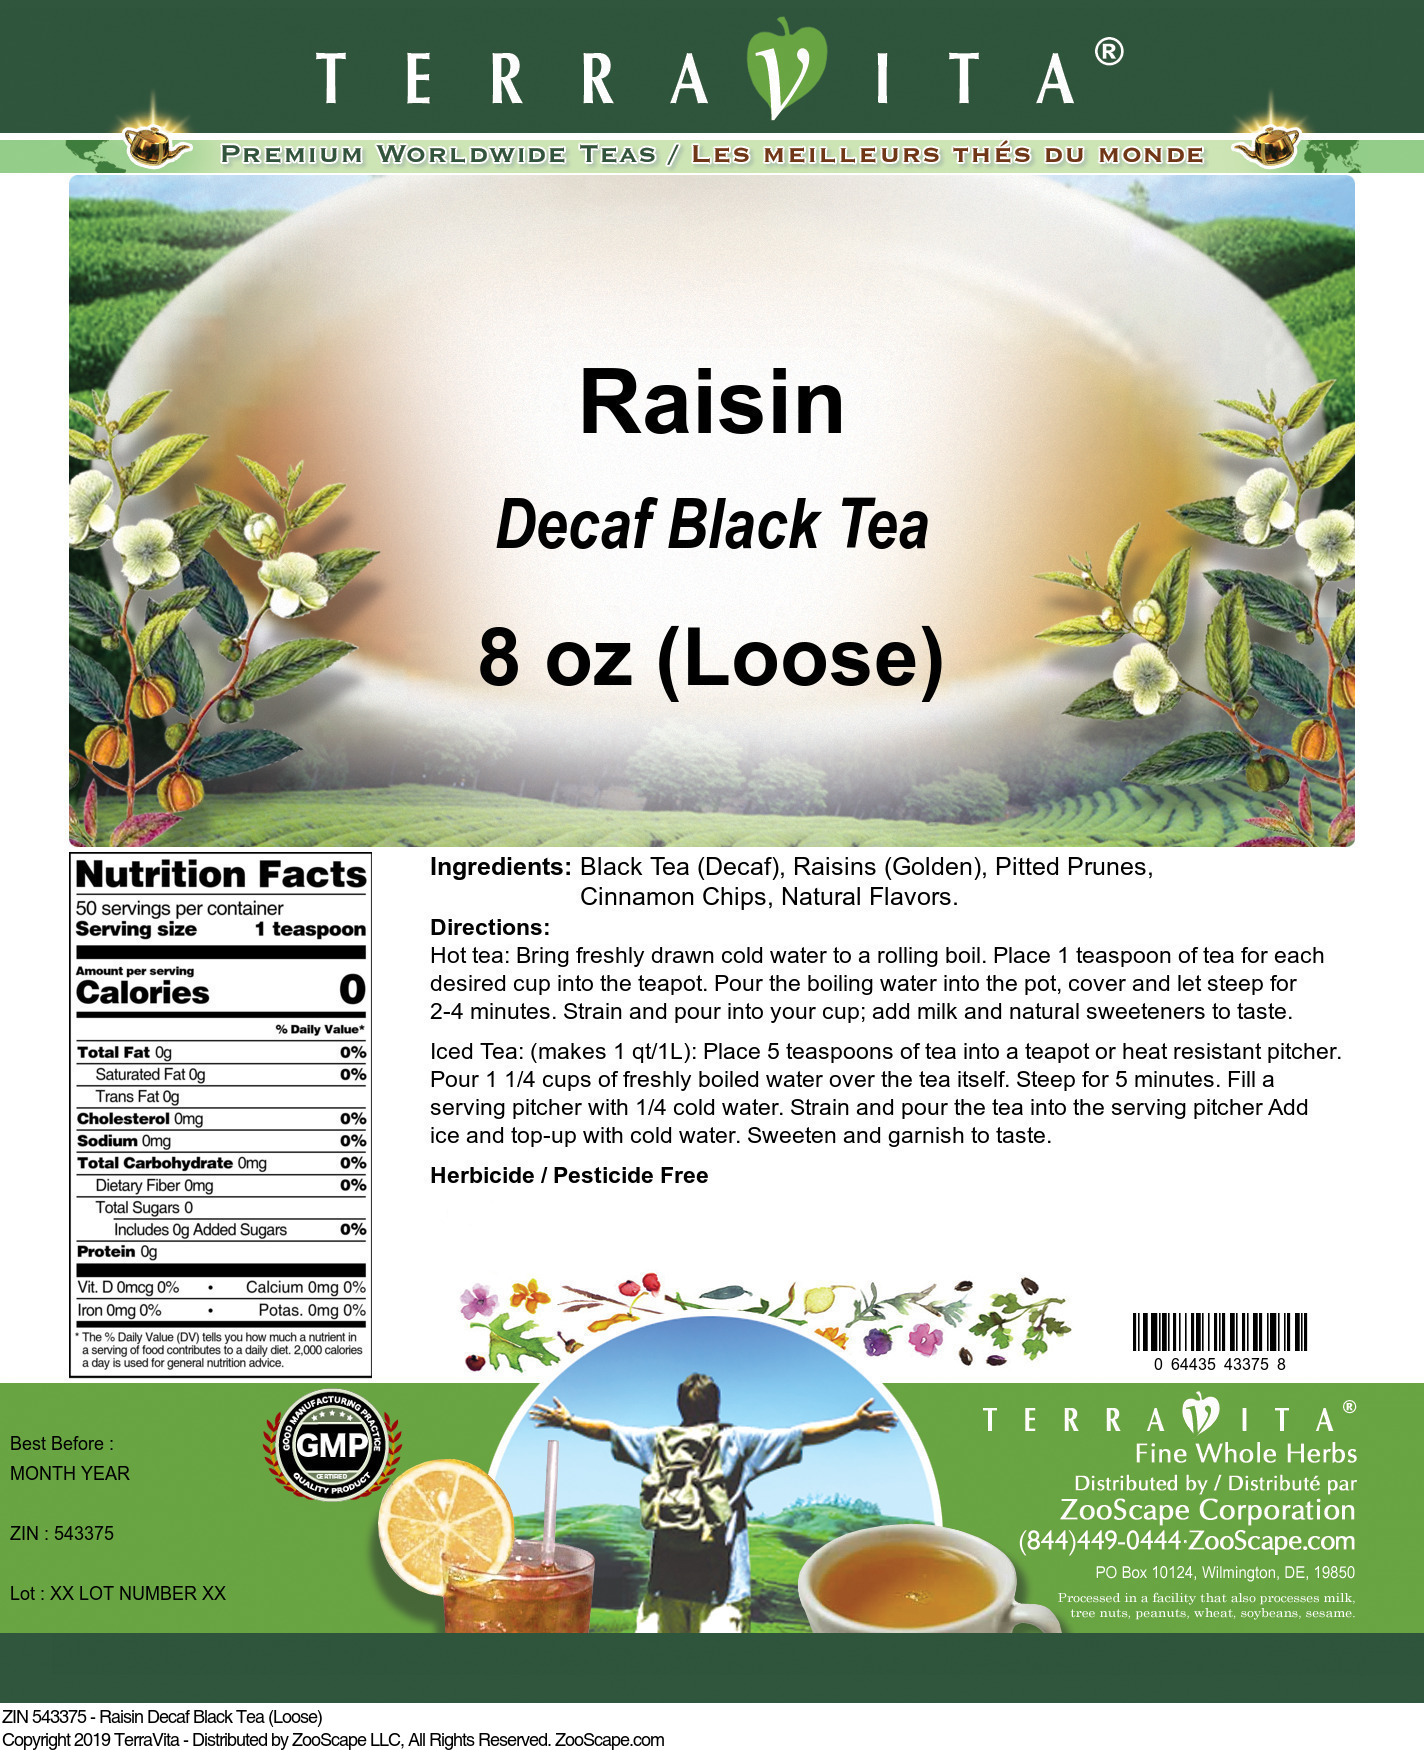 Raisin Decaf Black Tea (Loose) - Label